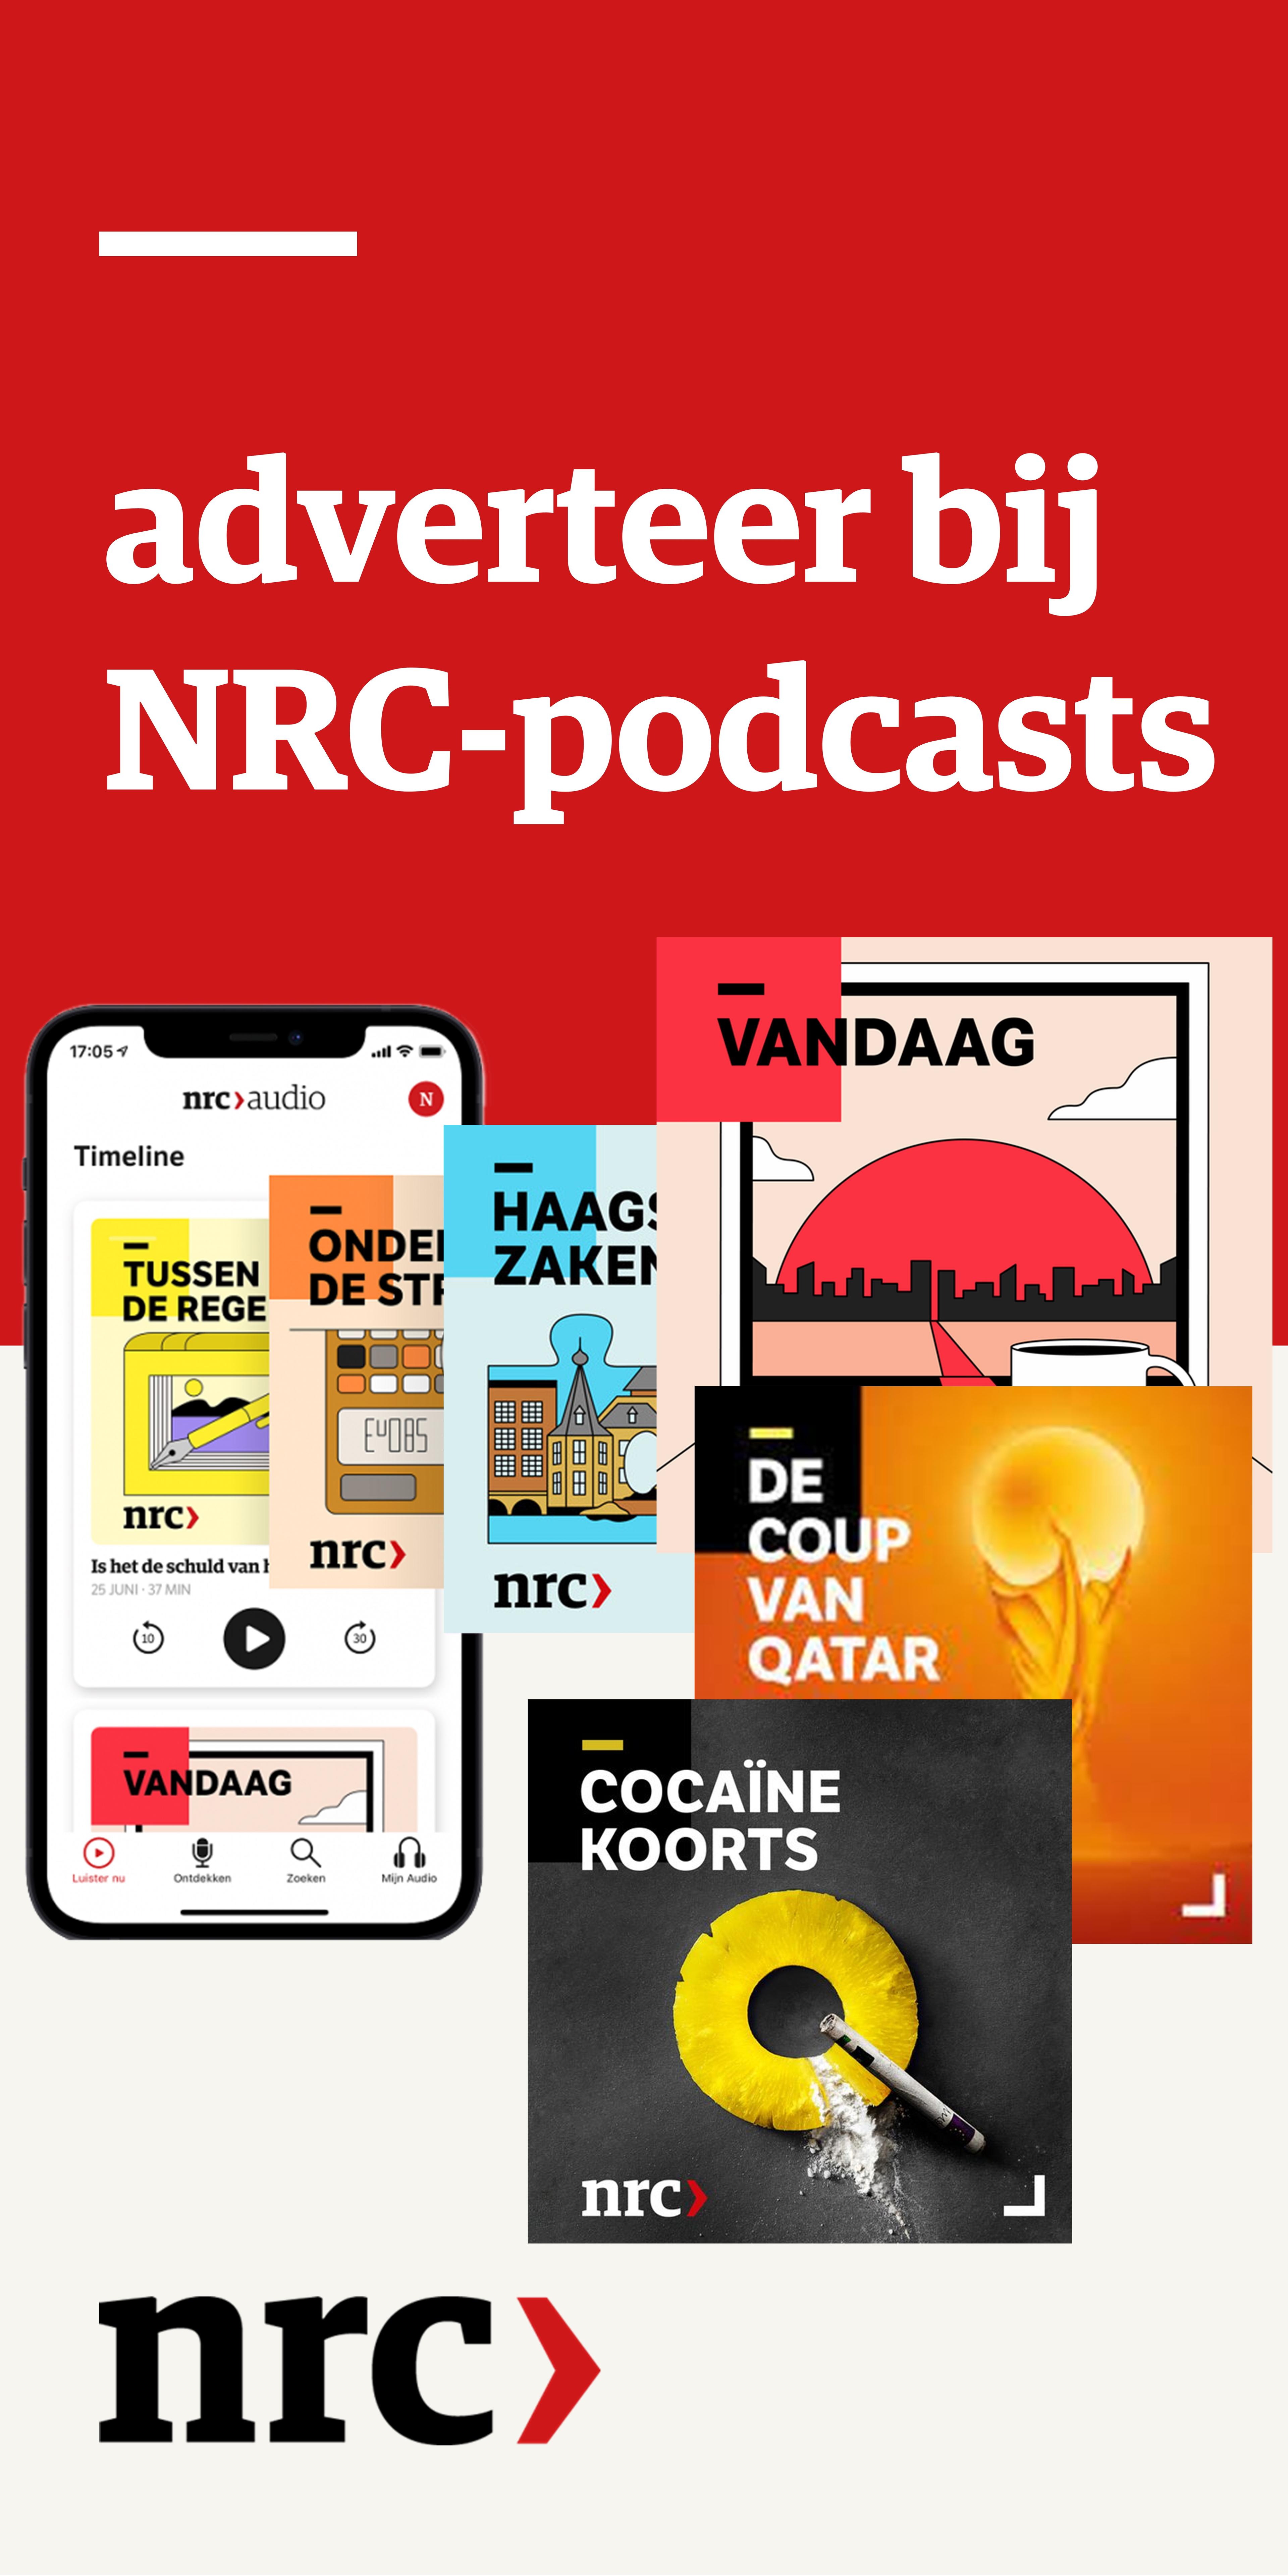 NRC-podcasts